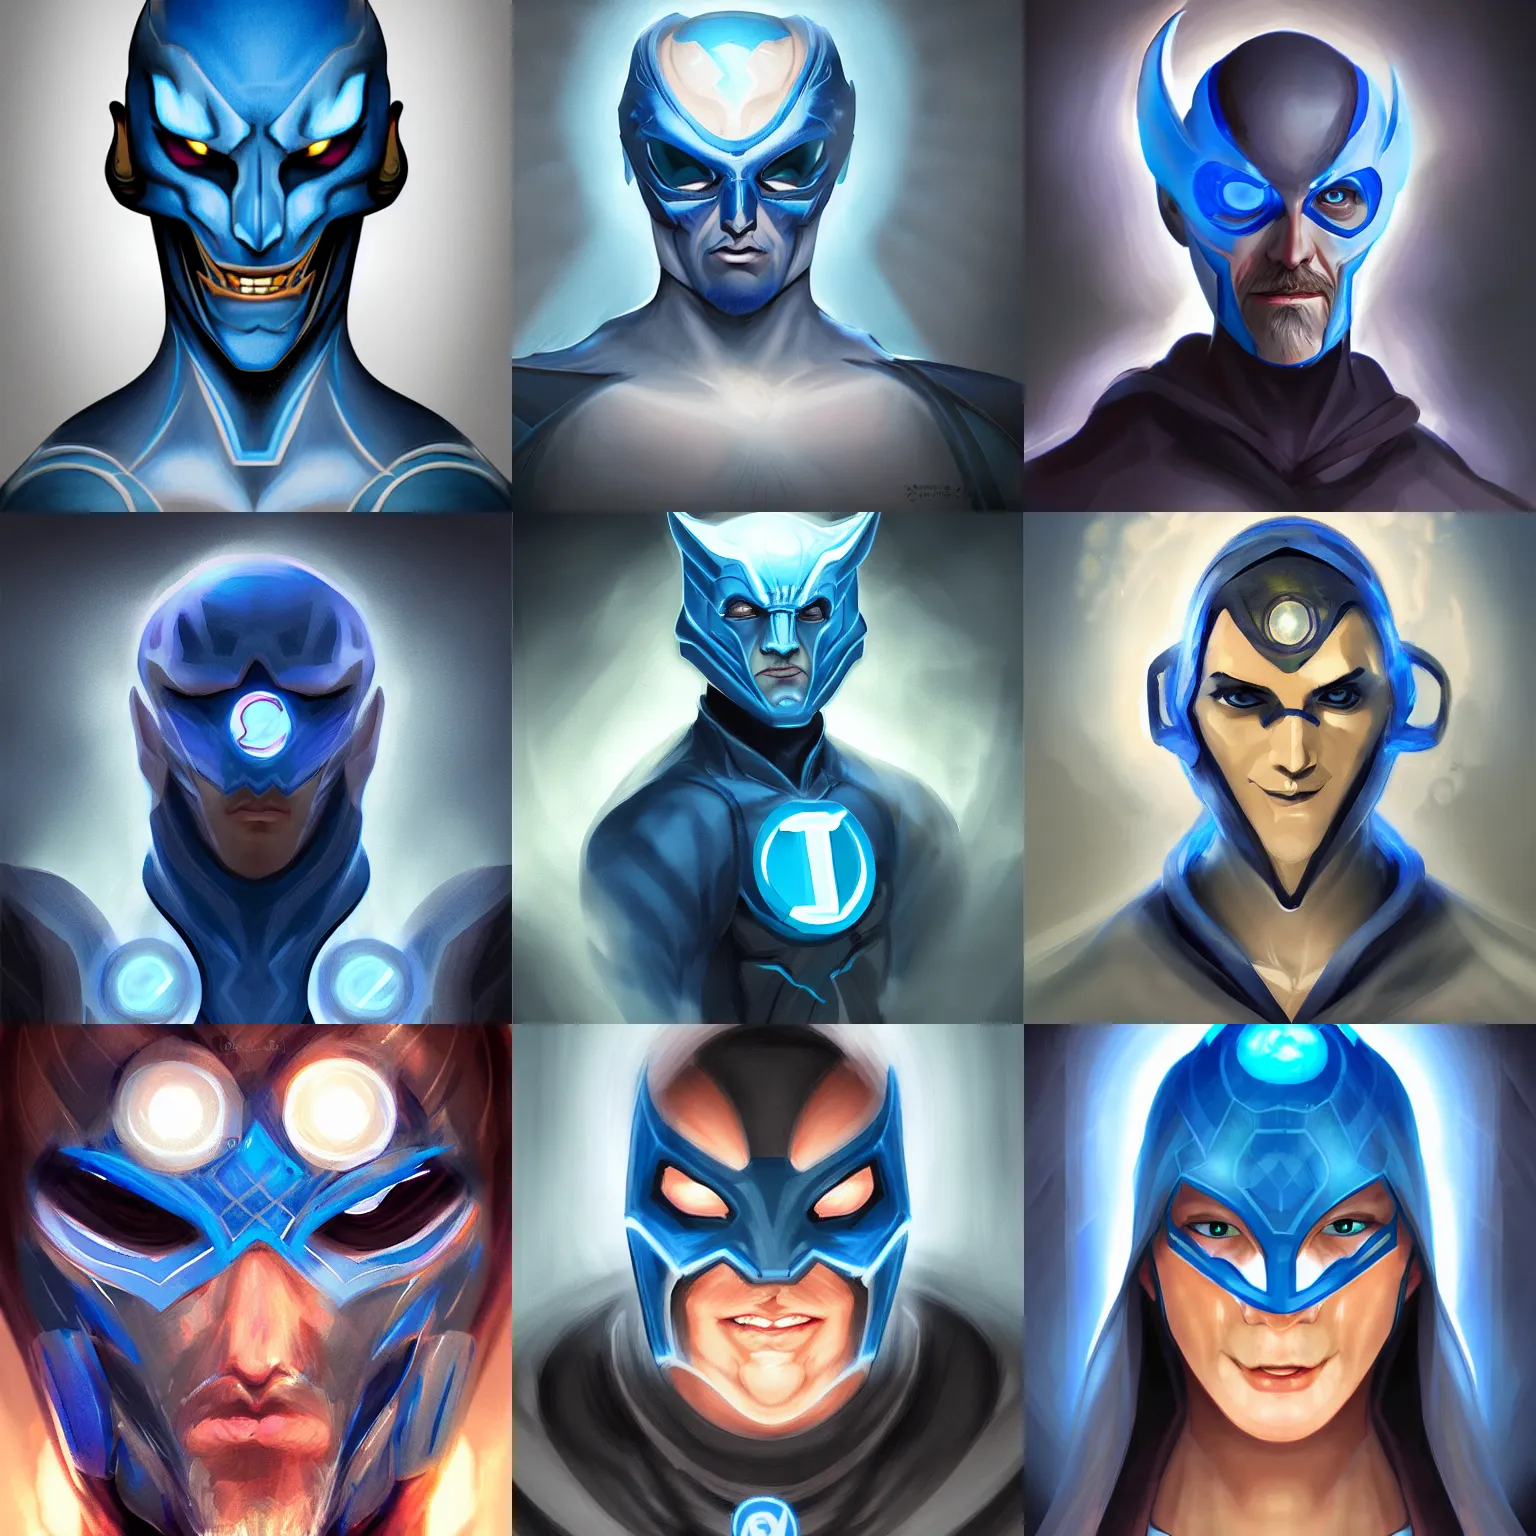 Prompt: character concept portrait, blue lantern, digital painting, concept art, smooth, sharp focus, illustration